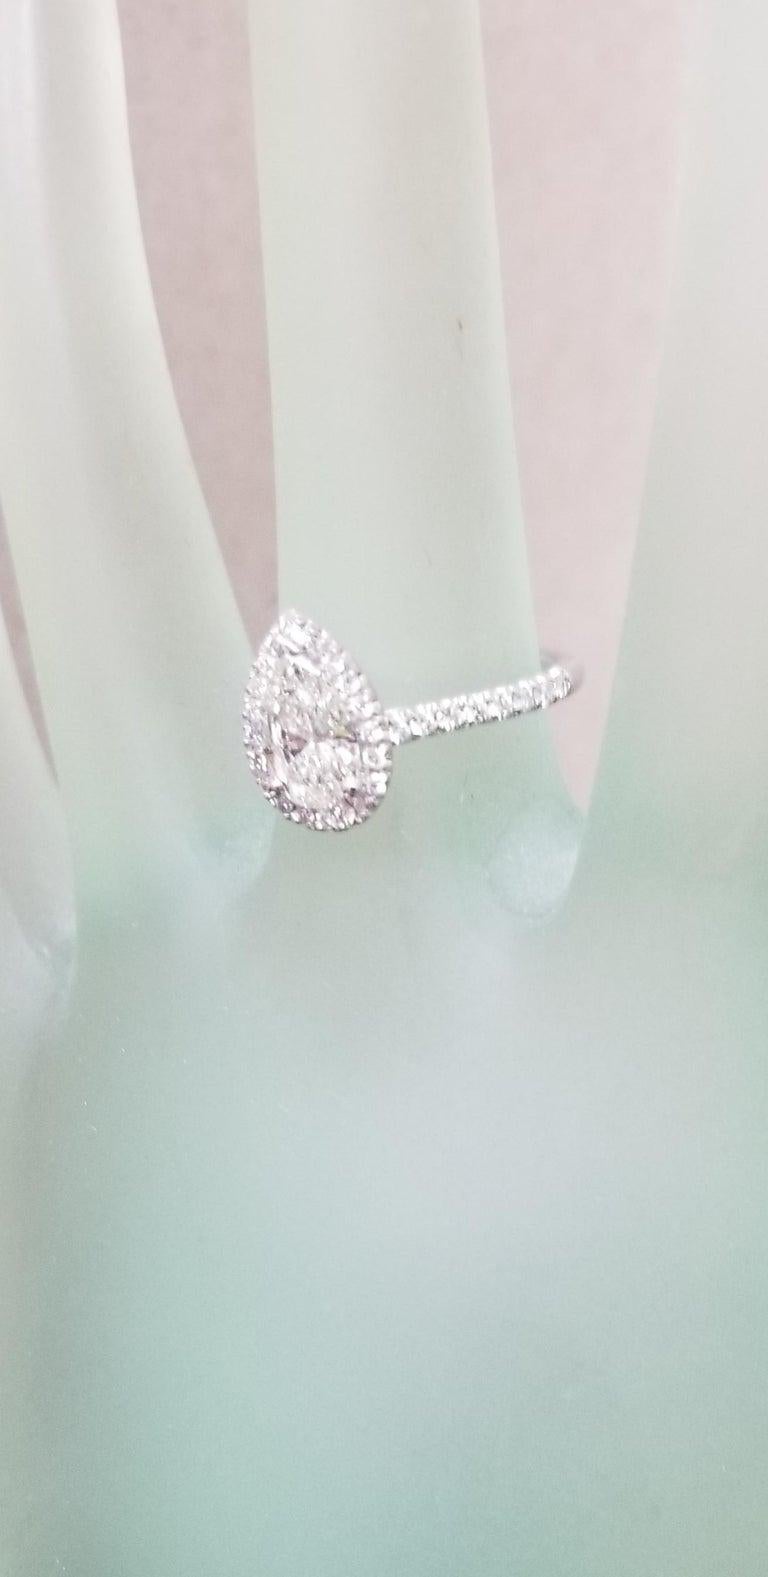 diamond ring snapchat